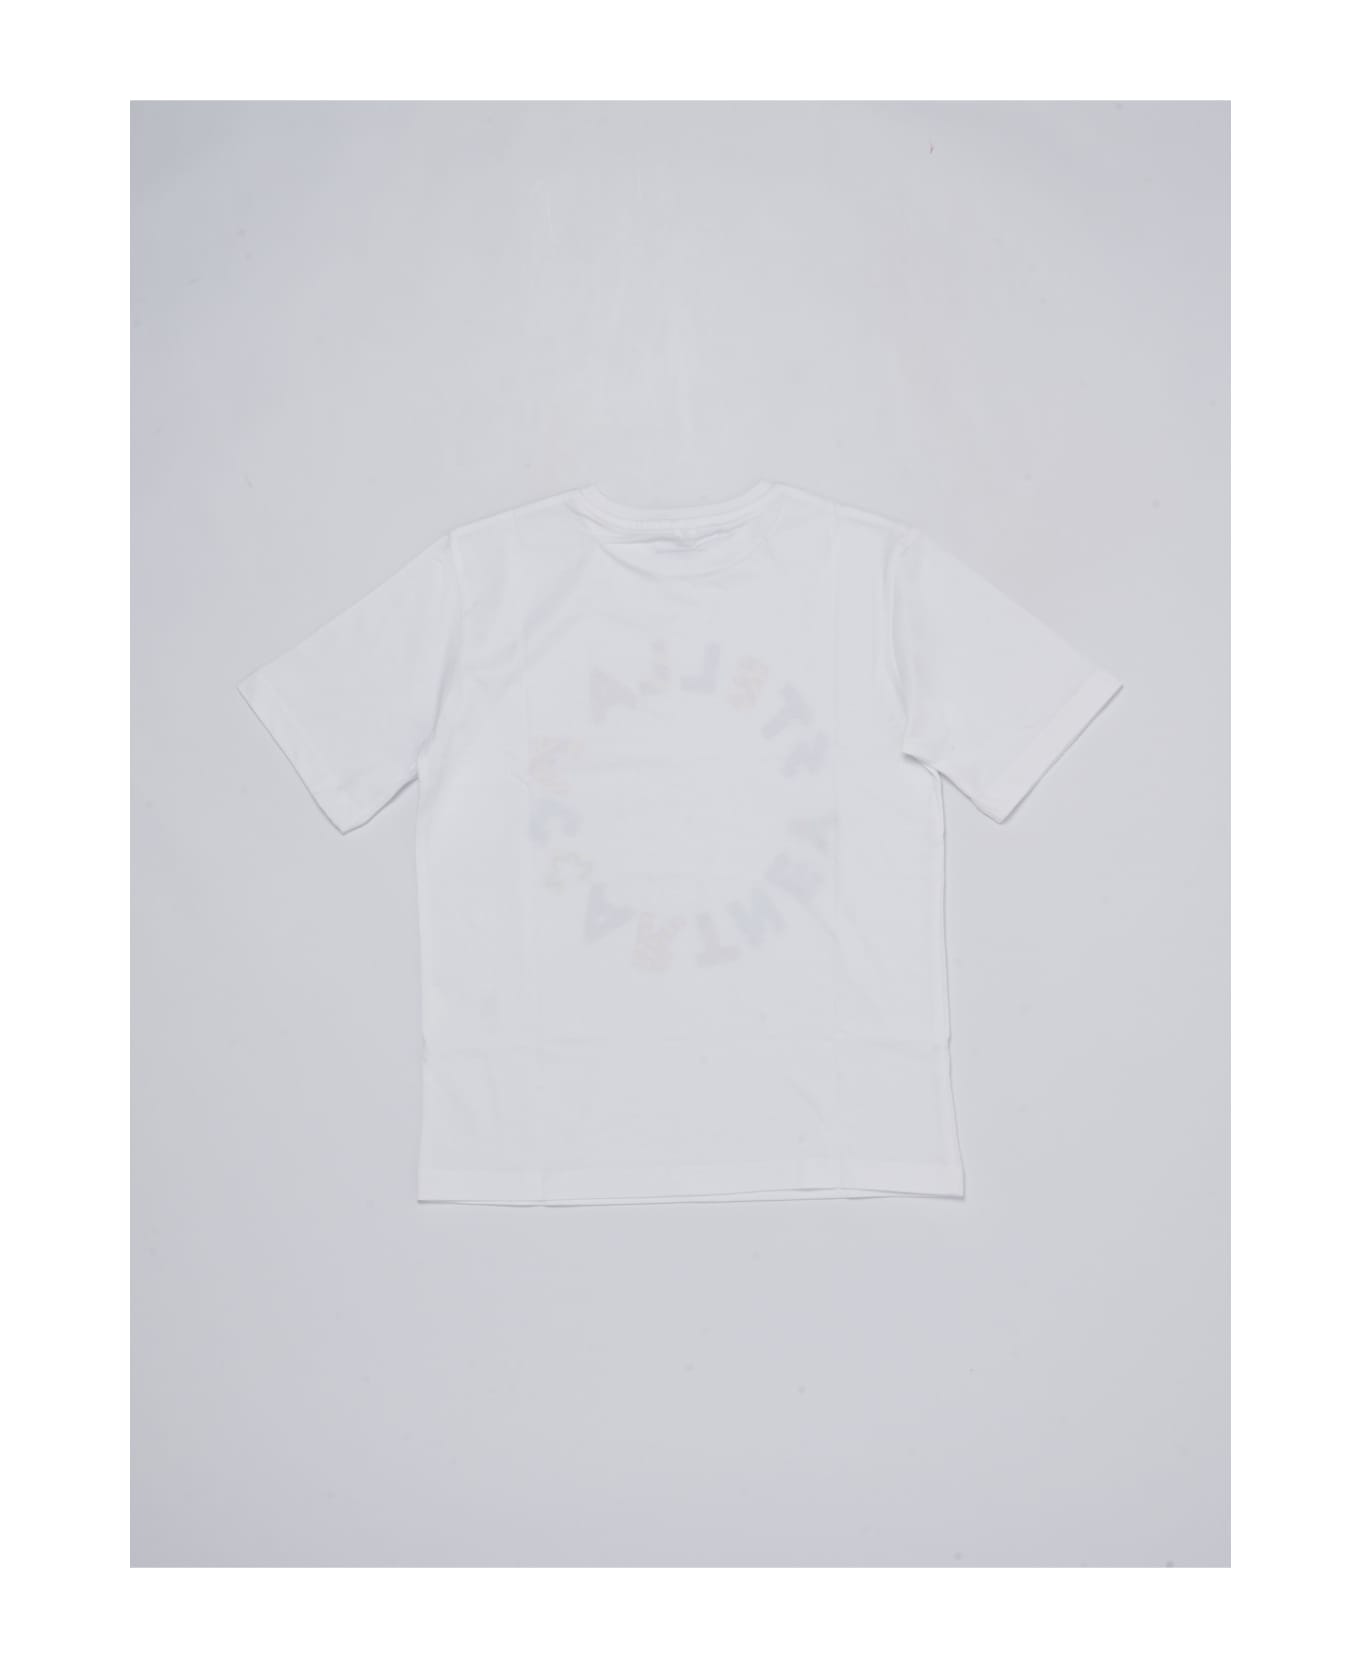 Stella McCartney T-shirt T-shirt - BIANCO